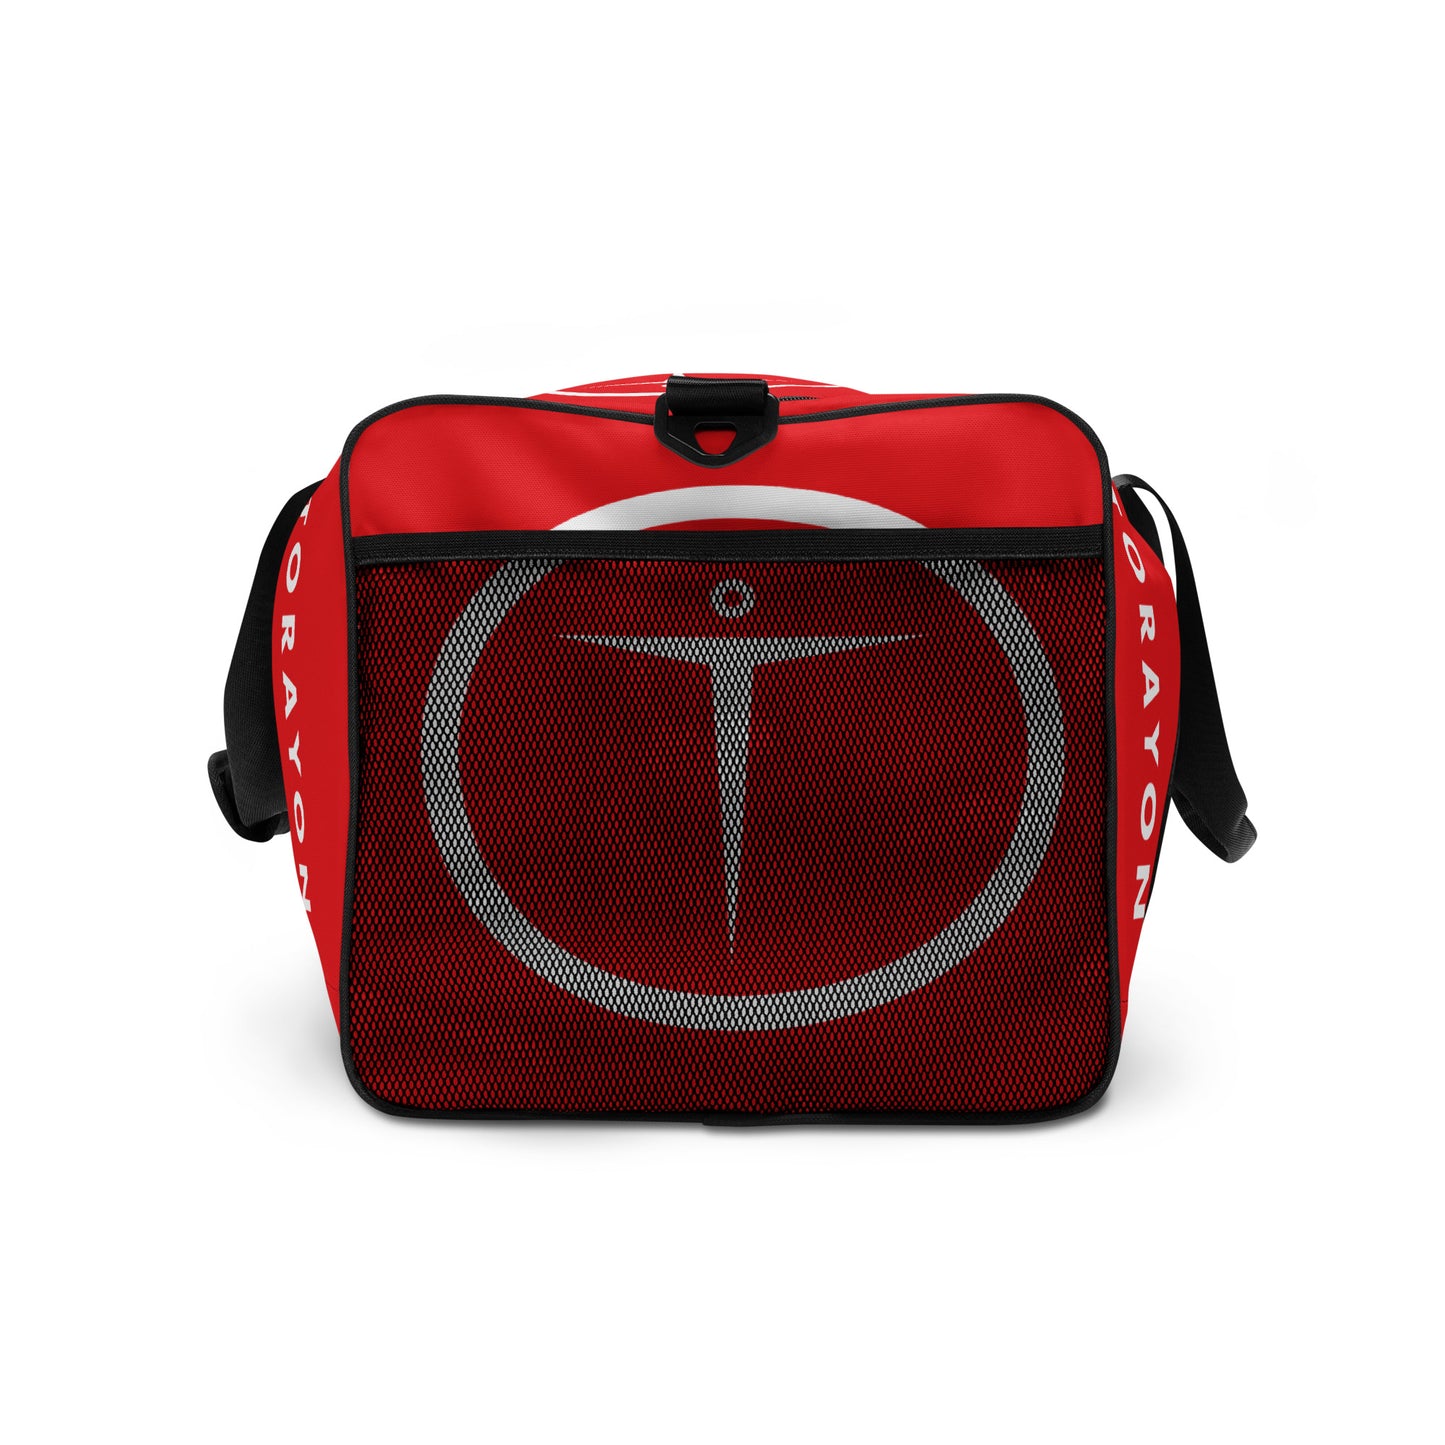 TORAYON Red Duffle bag